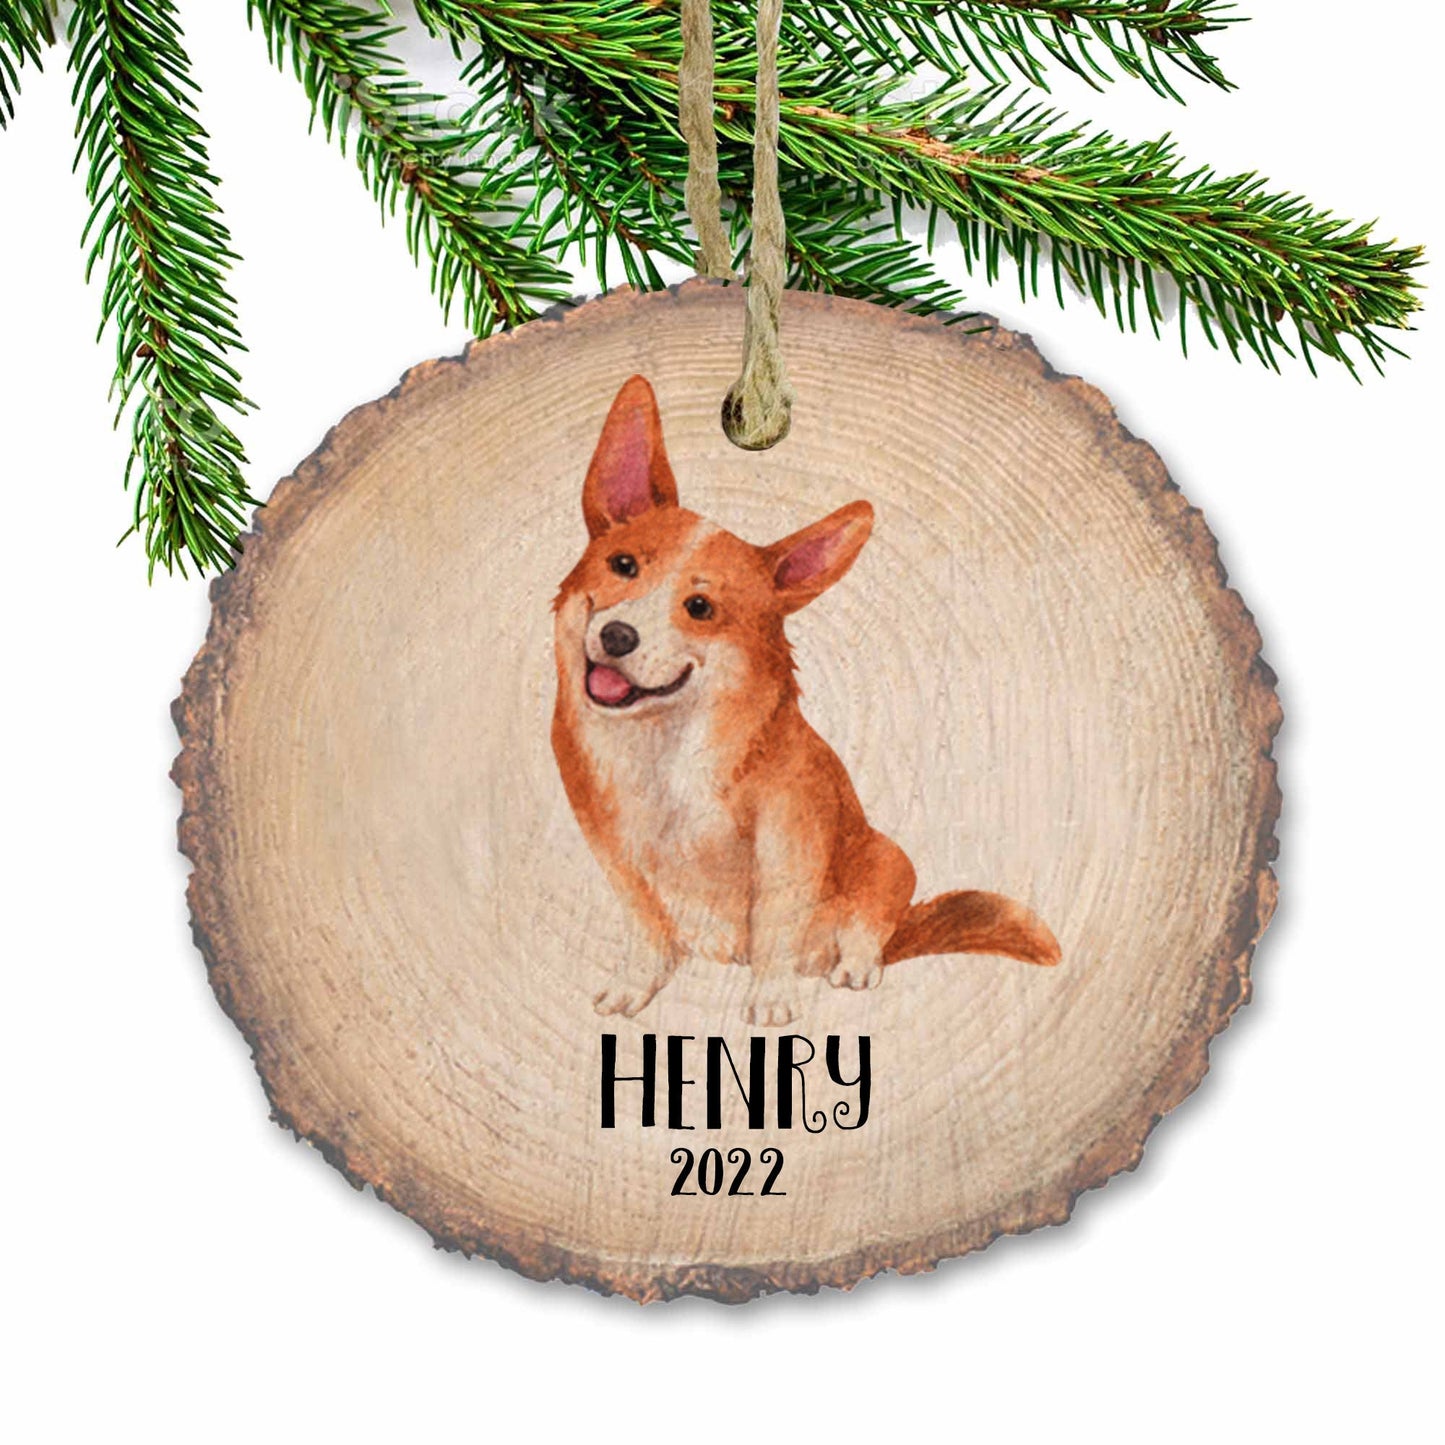 Corgi ornament, Christmas tree ornament, pet ornament, dog lover gift, wooden